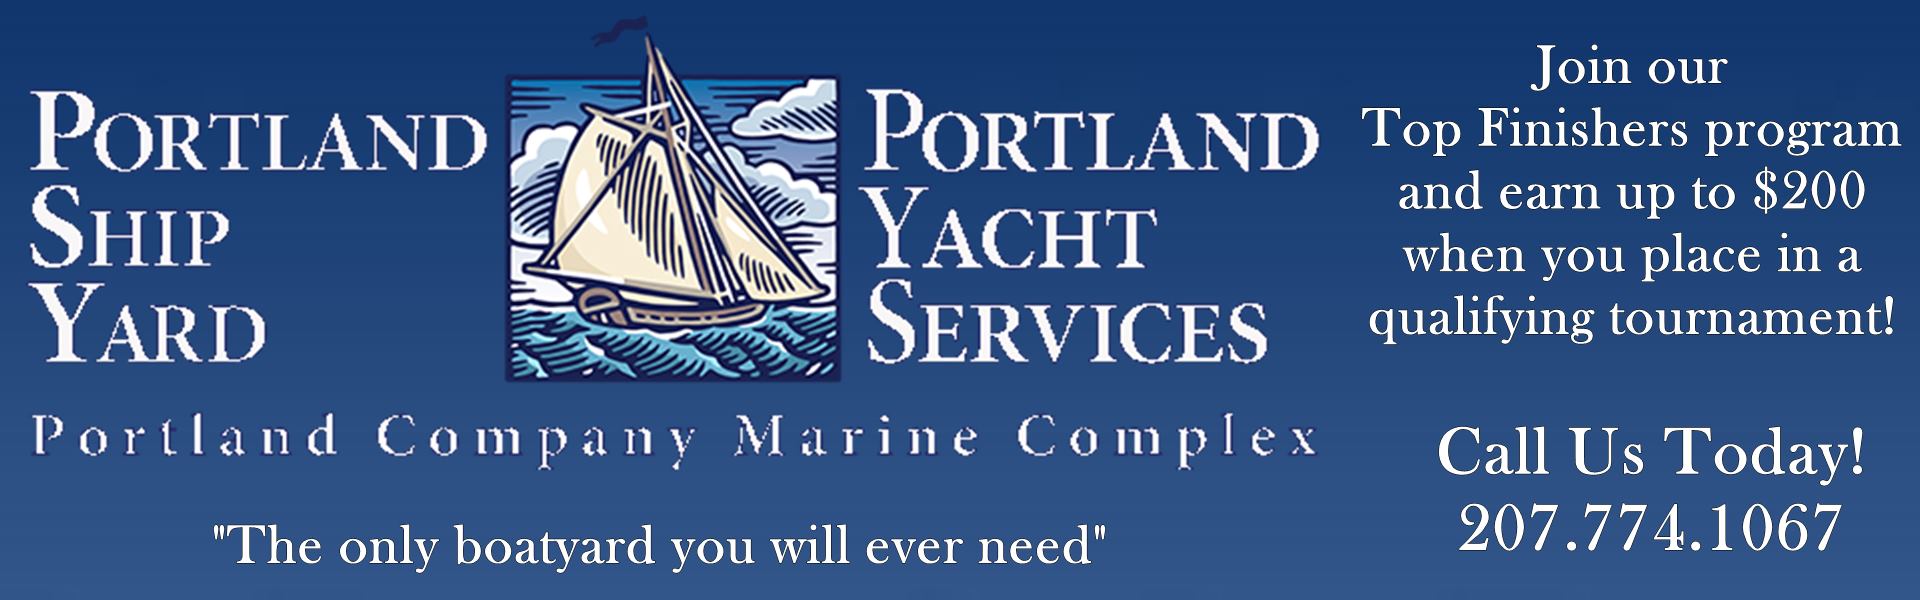 Portland Ship Yard Portland Yacht Services Portland Company Marine Complex